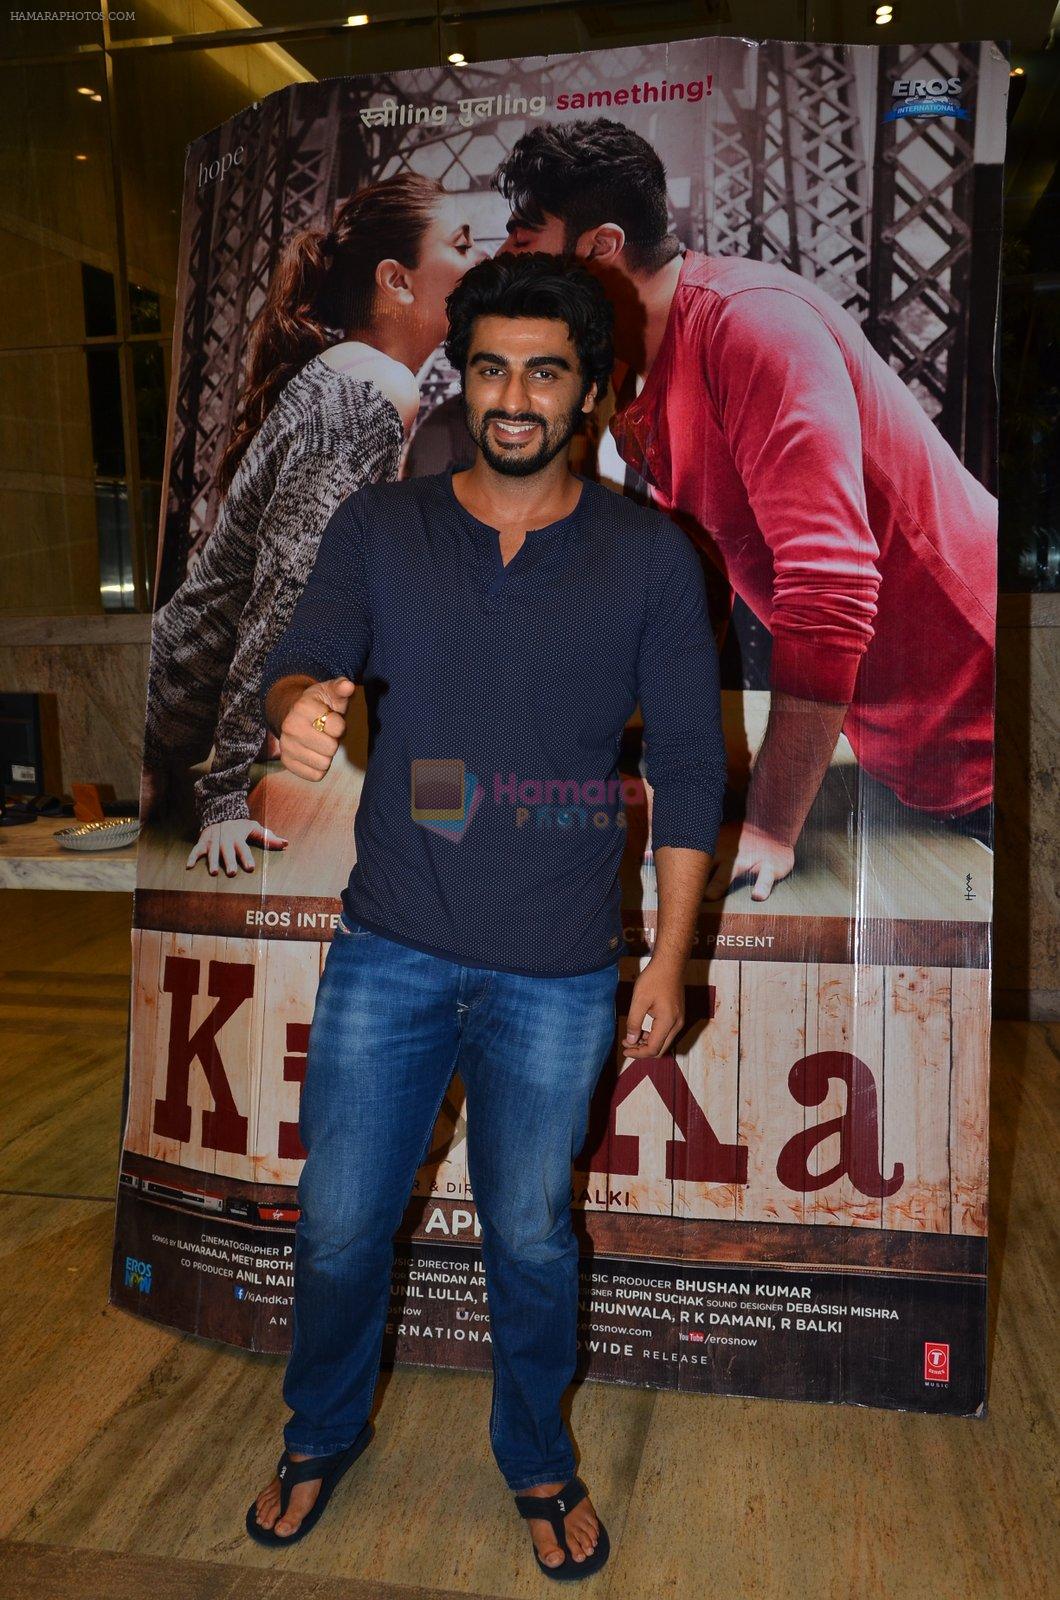 Arjun Kapoor at Ki and Ka screening in Mumbai on 23rd March 2016